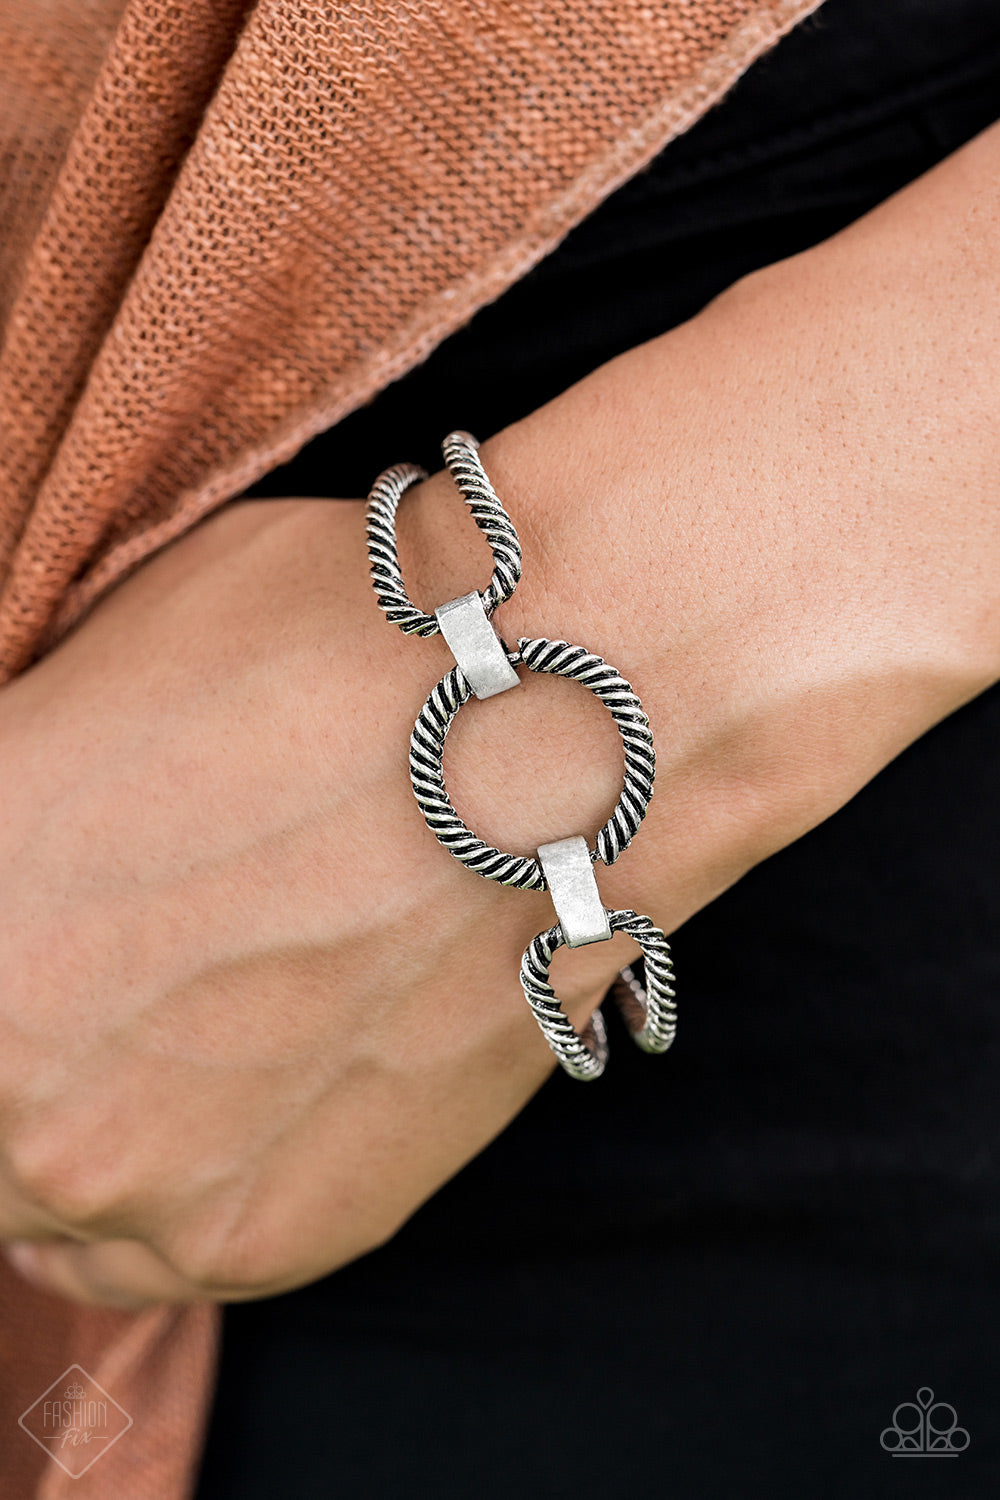 Paparazzi Desert Cat - Silver - Bracelet - Fashion Fix / Trend Blend Exclusive August 2019 - $5 Jewelry With Ashley Swint